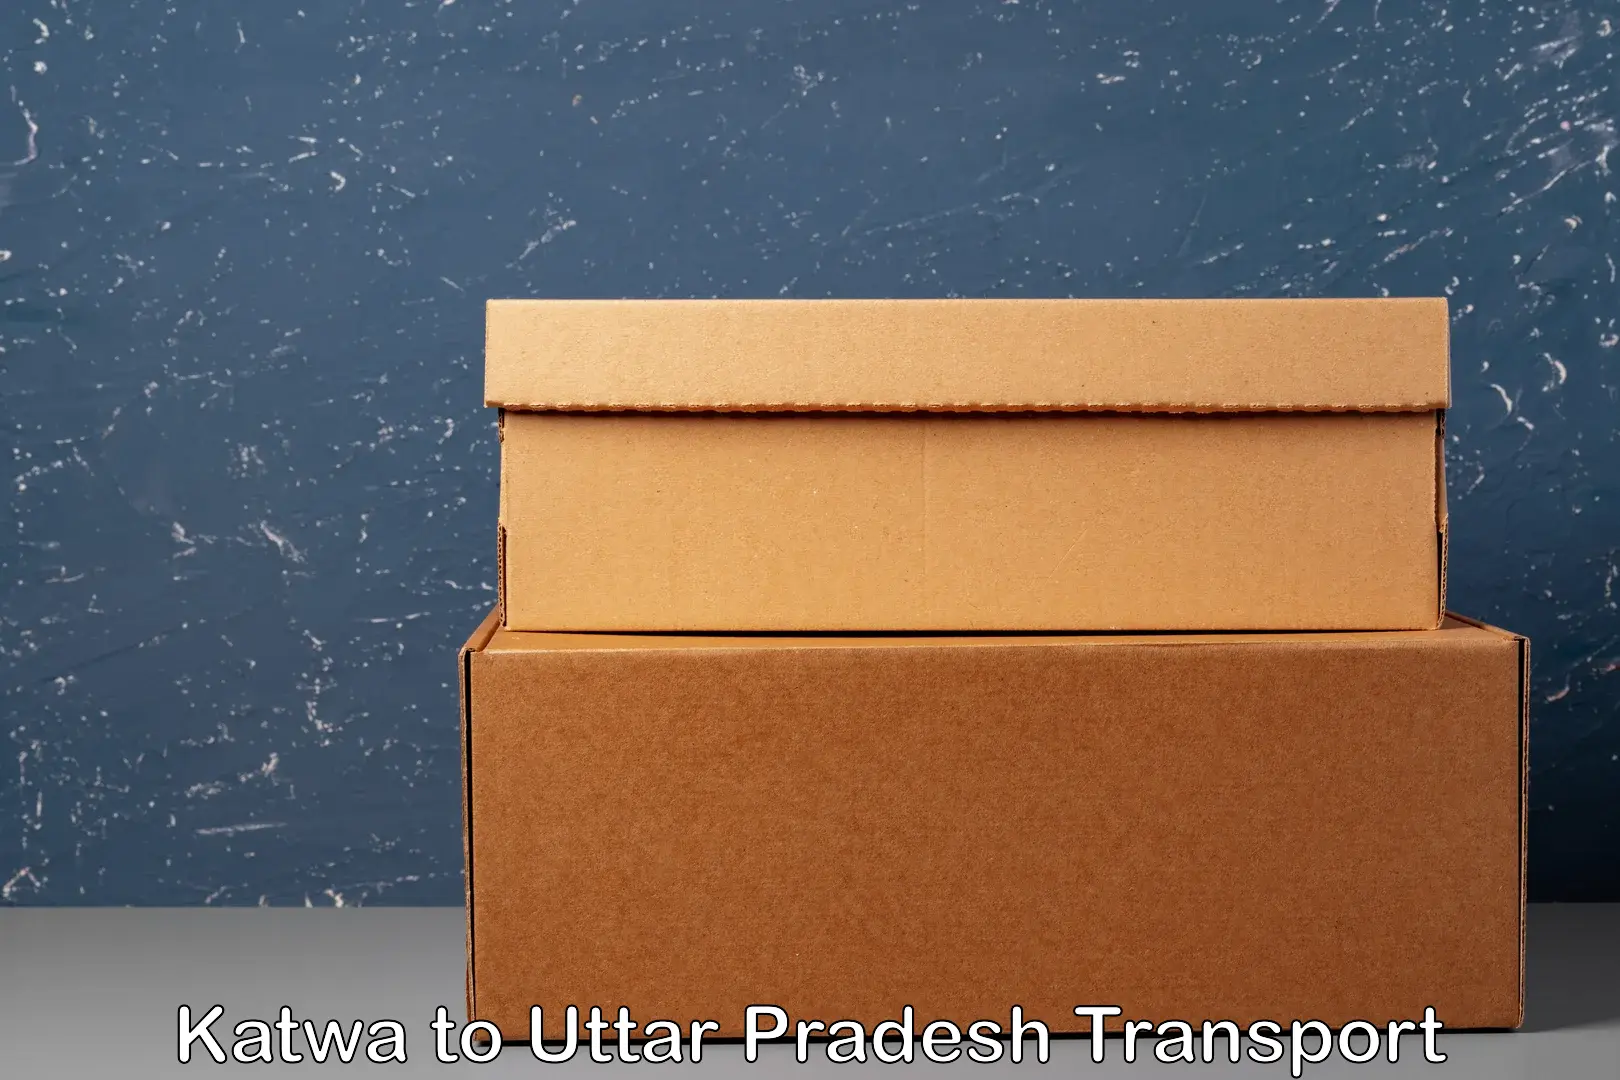 Air freight transport services in Katwa to Uttar Pradesh